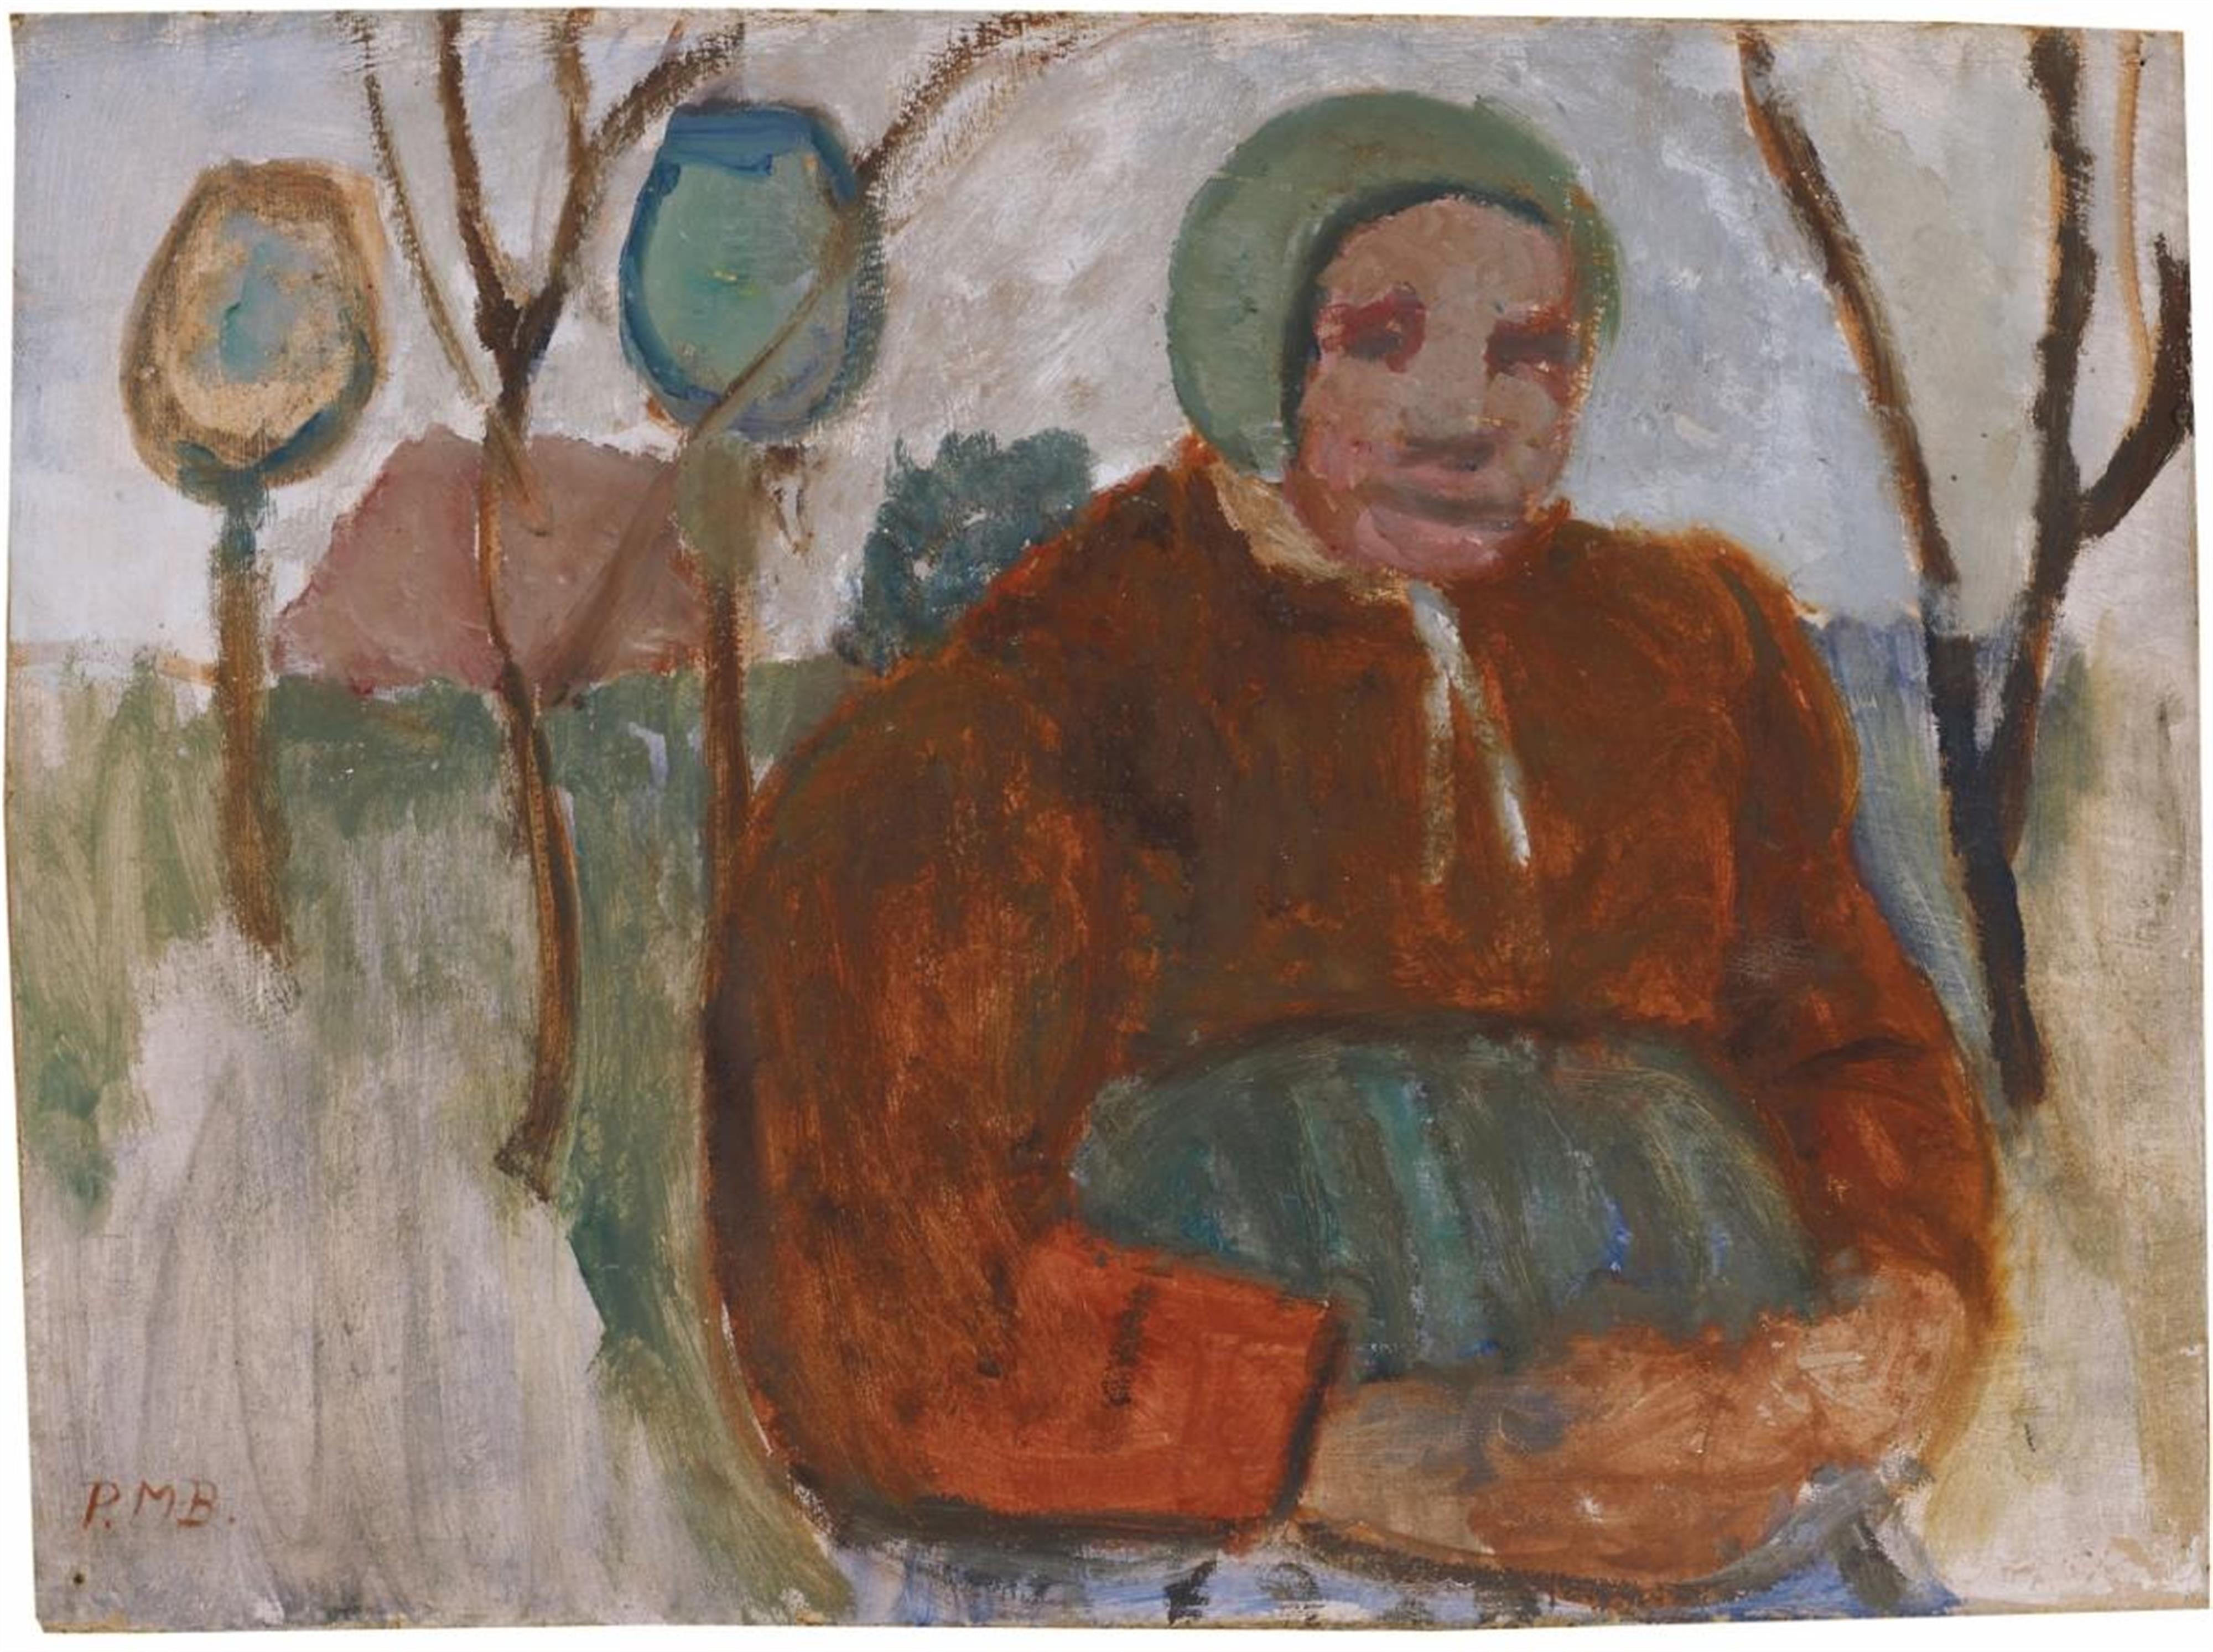 Paula Modersohn-Becker - Armenhäuslerin im Garten sitzend (Old Woman from the Poorhouse sitting in the Garden) - image-1